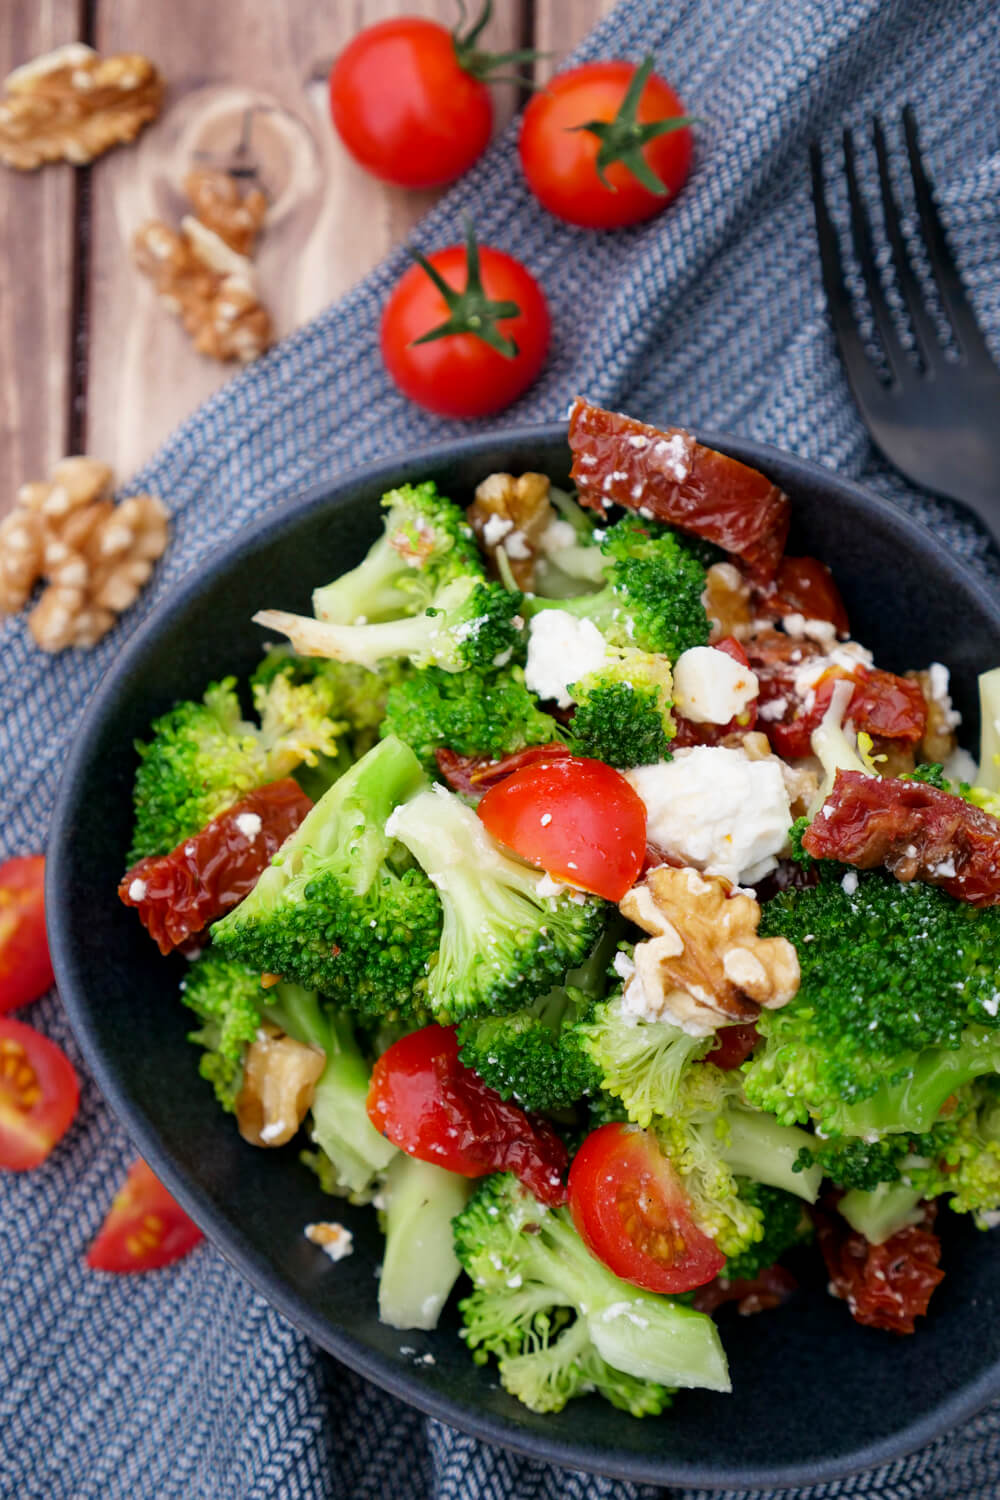 Gesunder Fitness-Salat: Brokkoli-Salat mit getrockneten Tomaten, Feta, Walnüssen und Tomaten